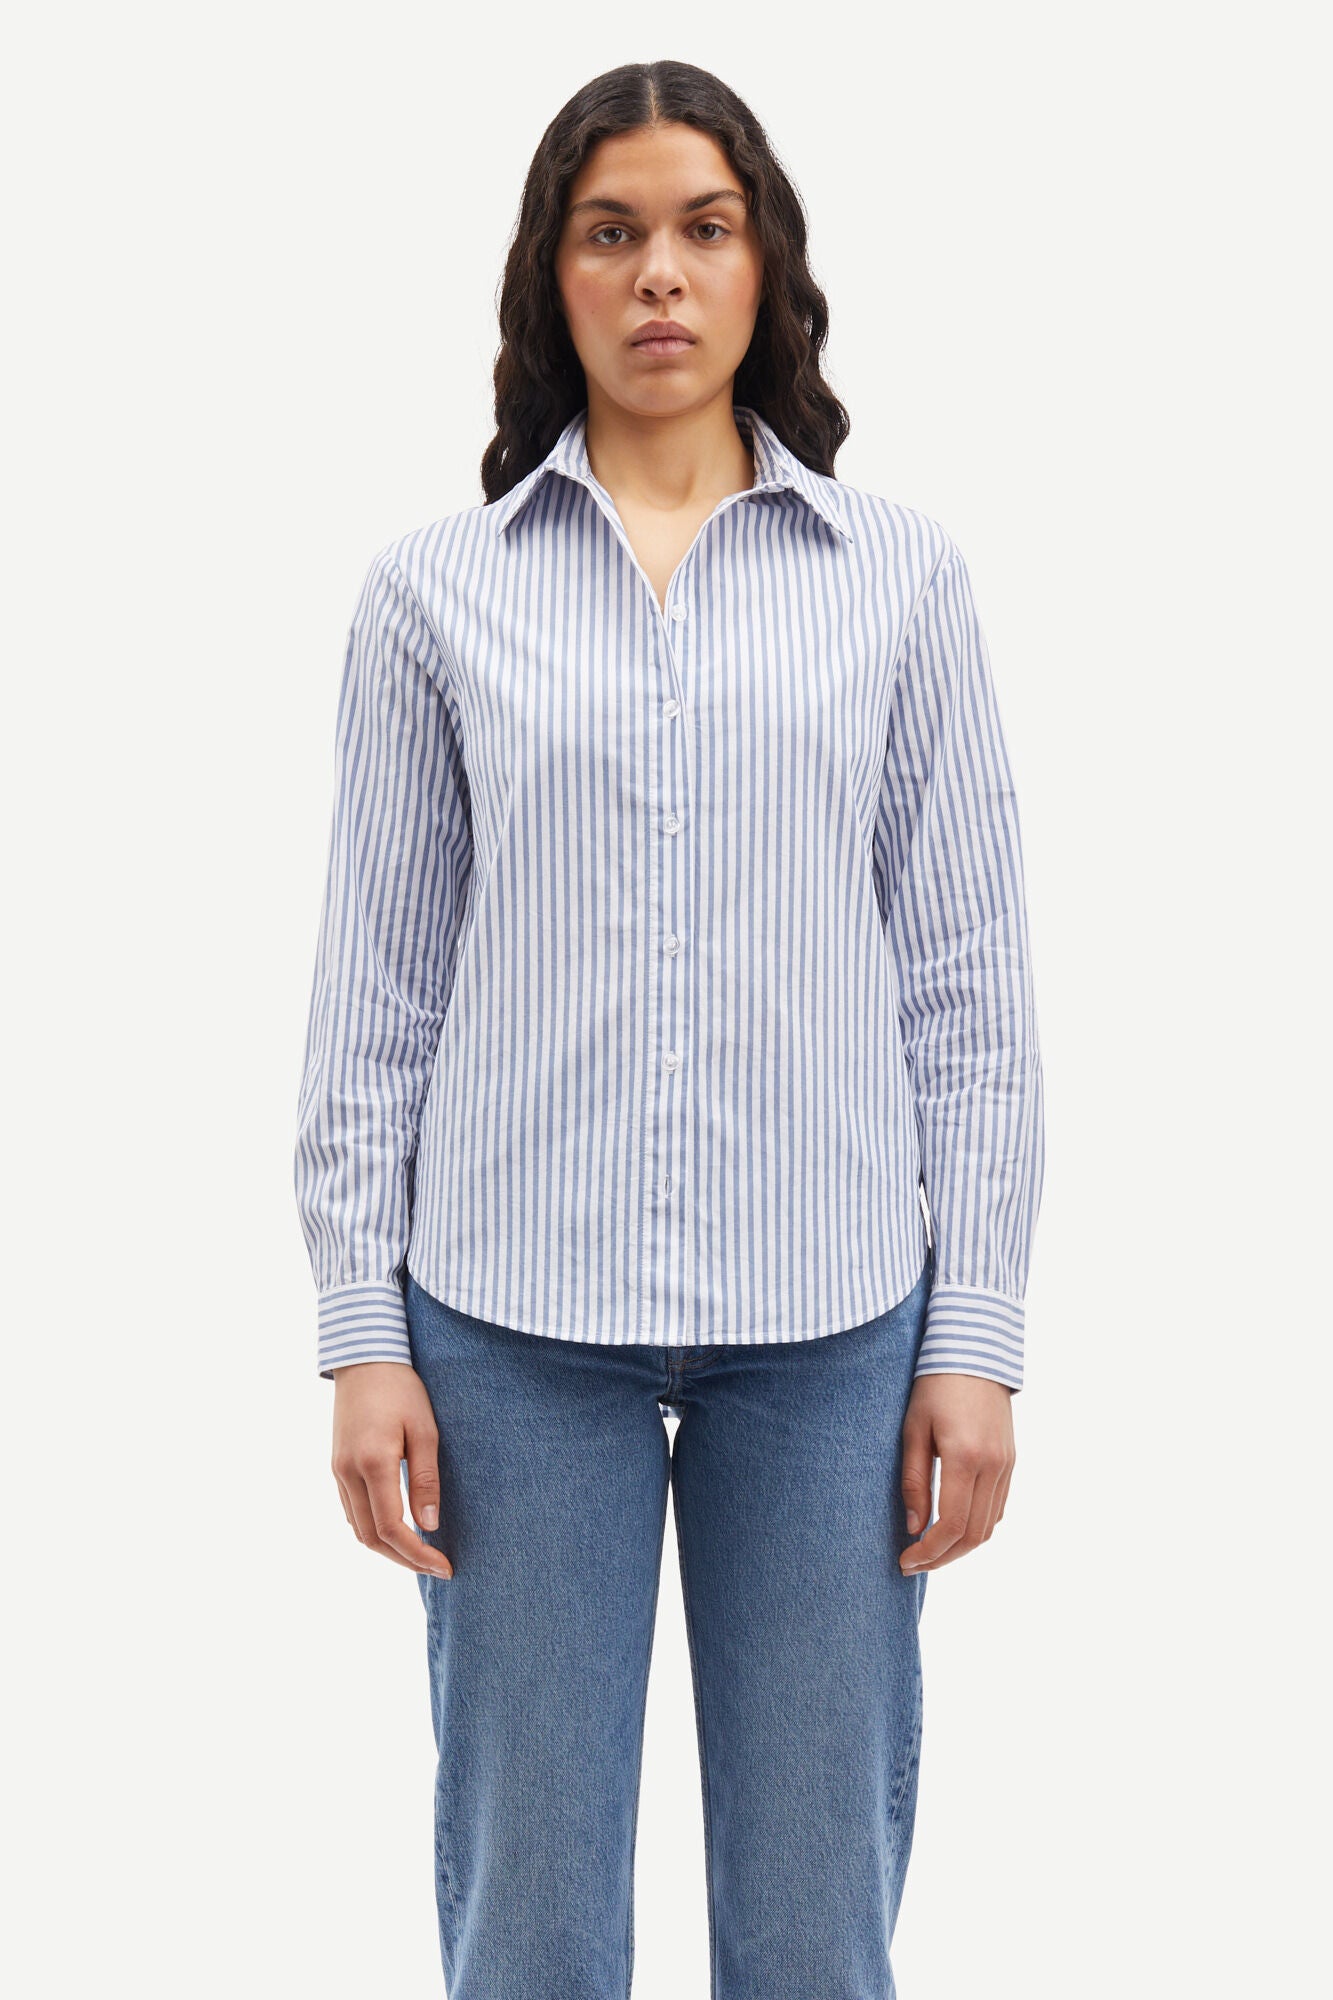 Samadisoni shirt in blue white stripes